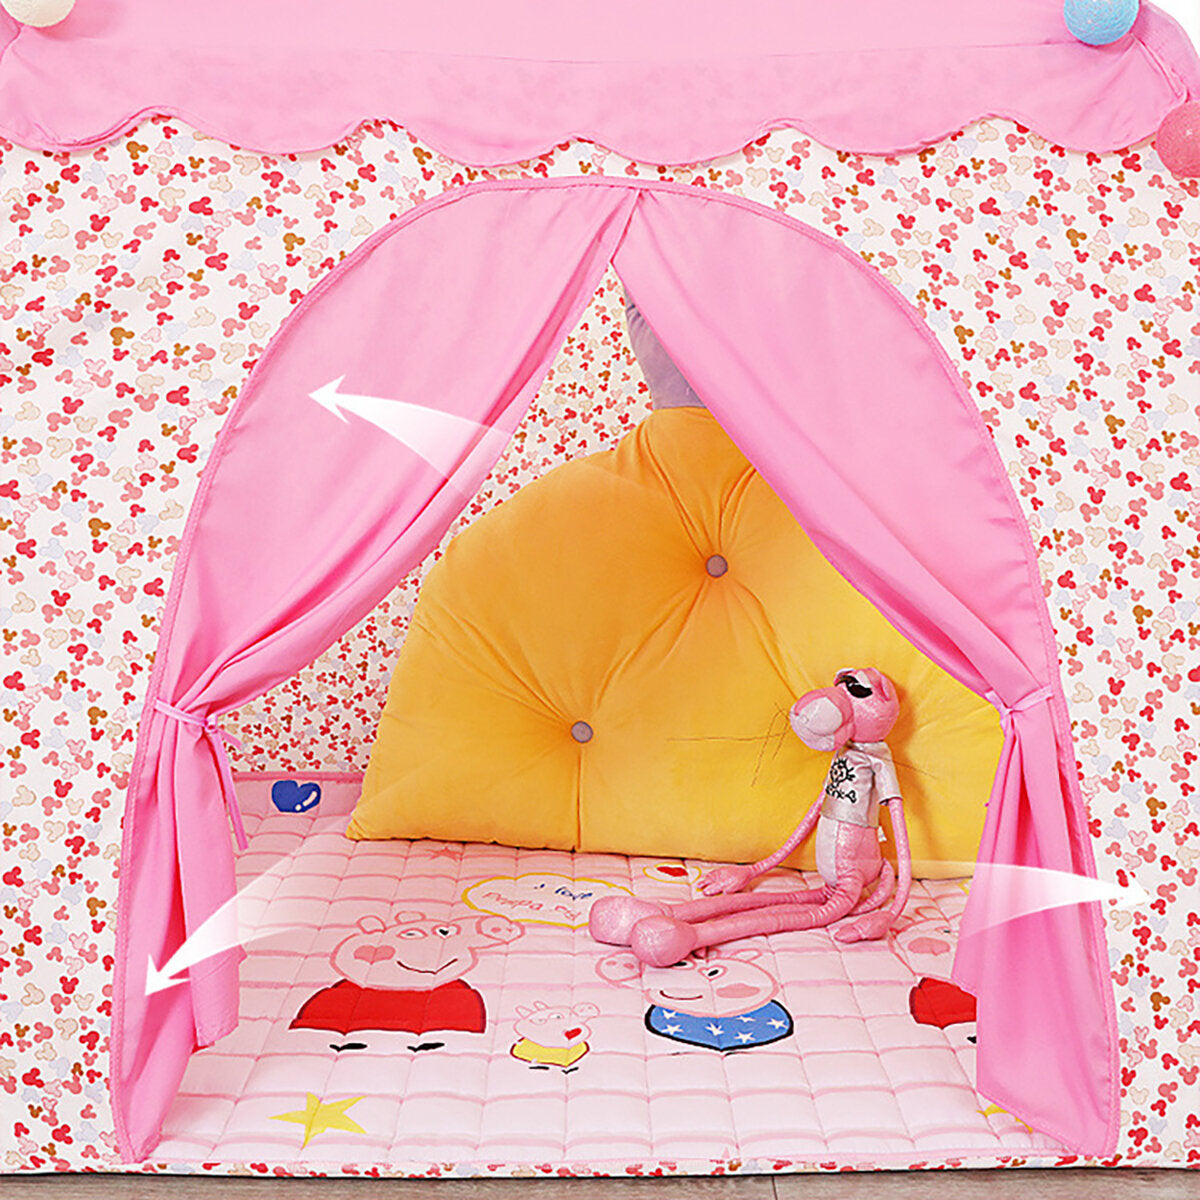 Portable Folding Baby Toy Prince Princess Tent Children Castle Play House Outdoor Kids Beach Backyard Garden Toys